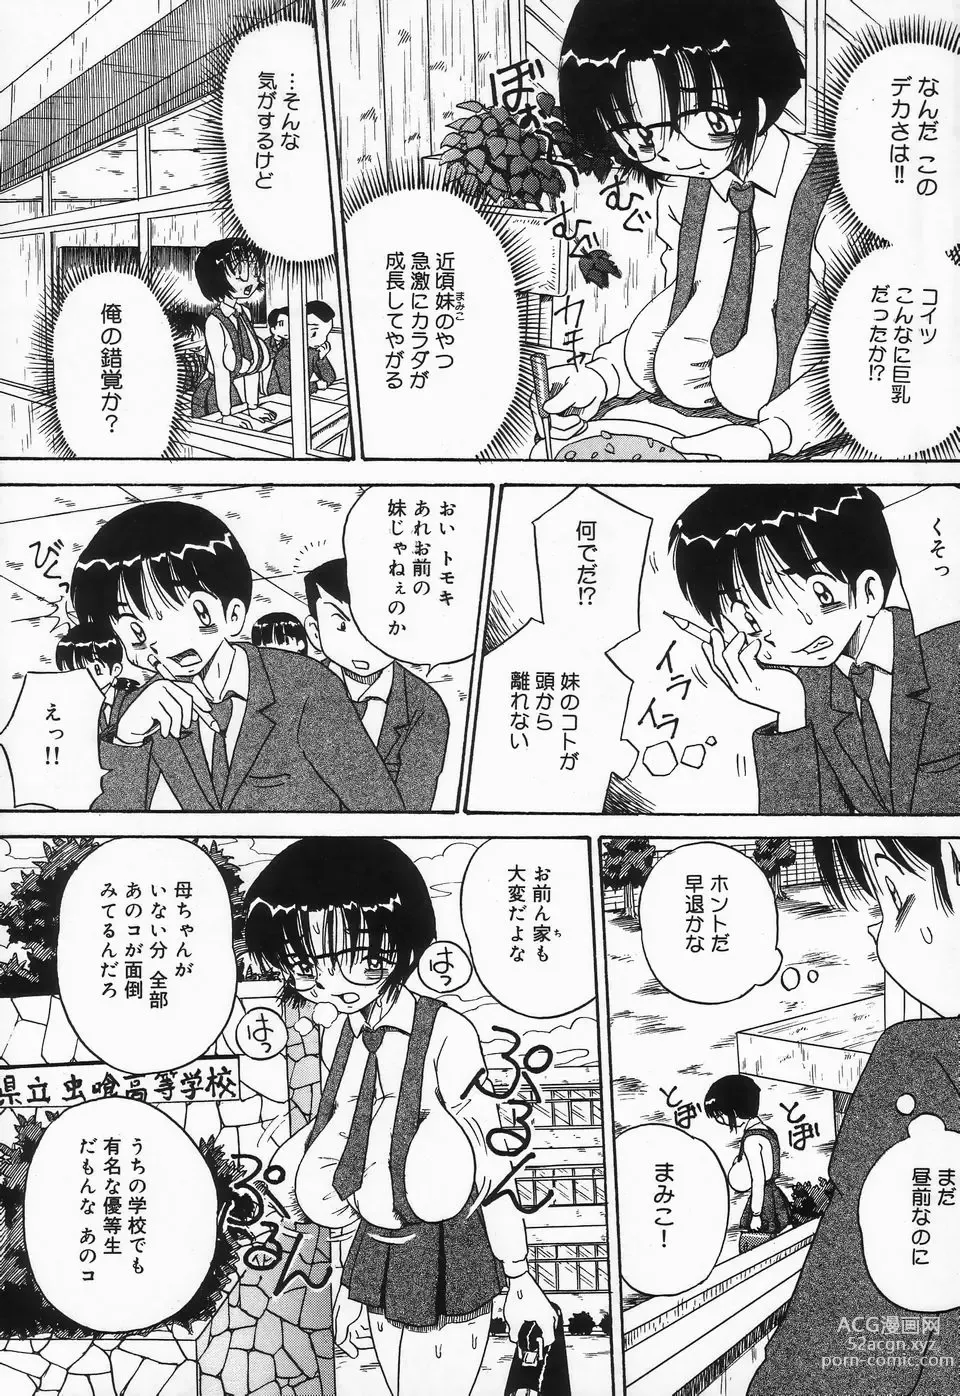 Page 153 of manga Seieki Mamire Bakunyuu Naburi